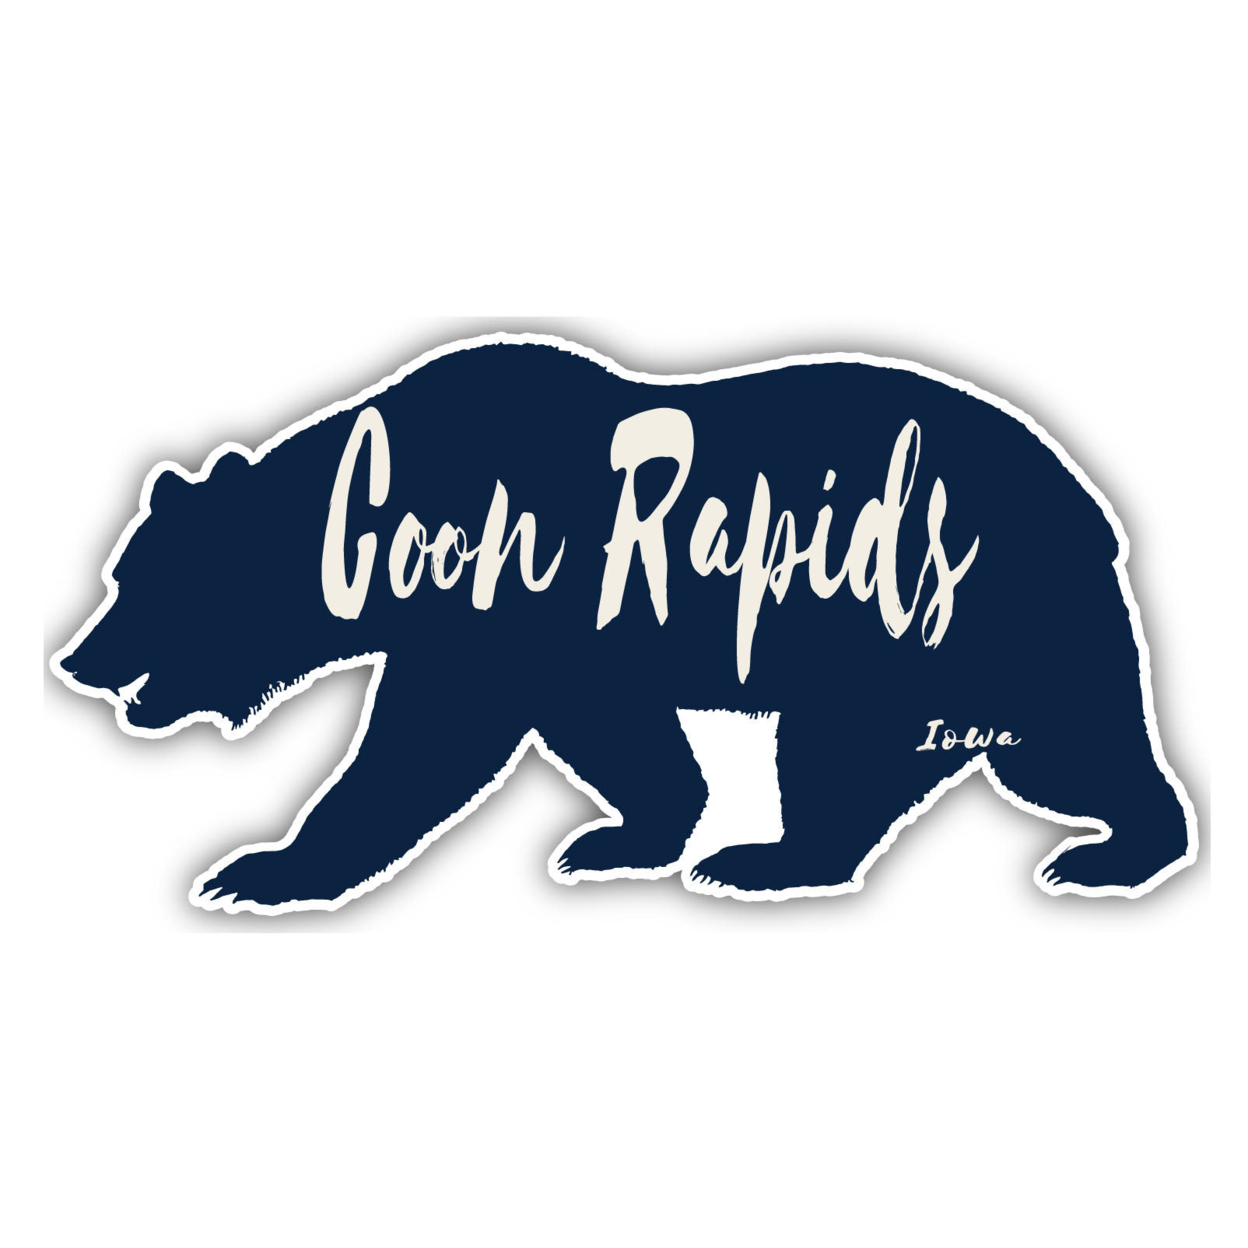 Coon Rapids Iowa Souvenir Decorative Stickers (Choose Theme And Size) - Single Unit, 2-Inch, Bear